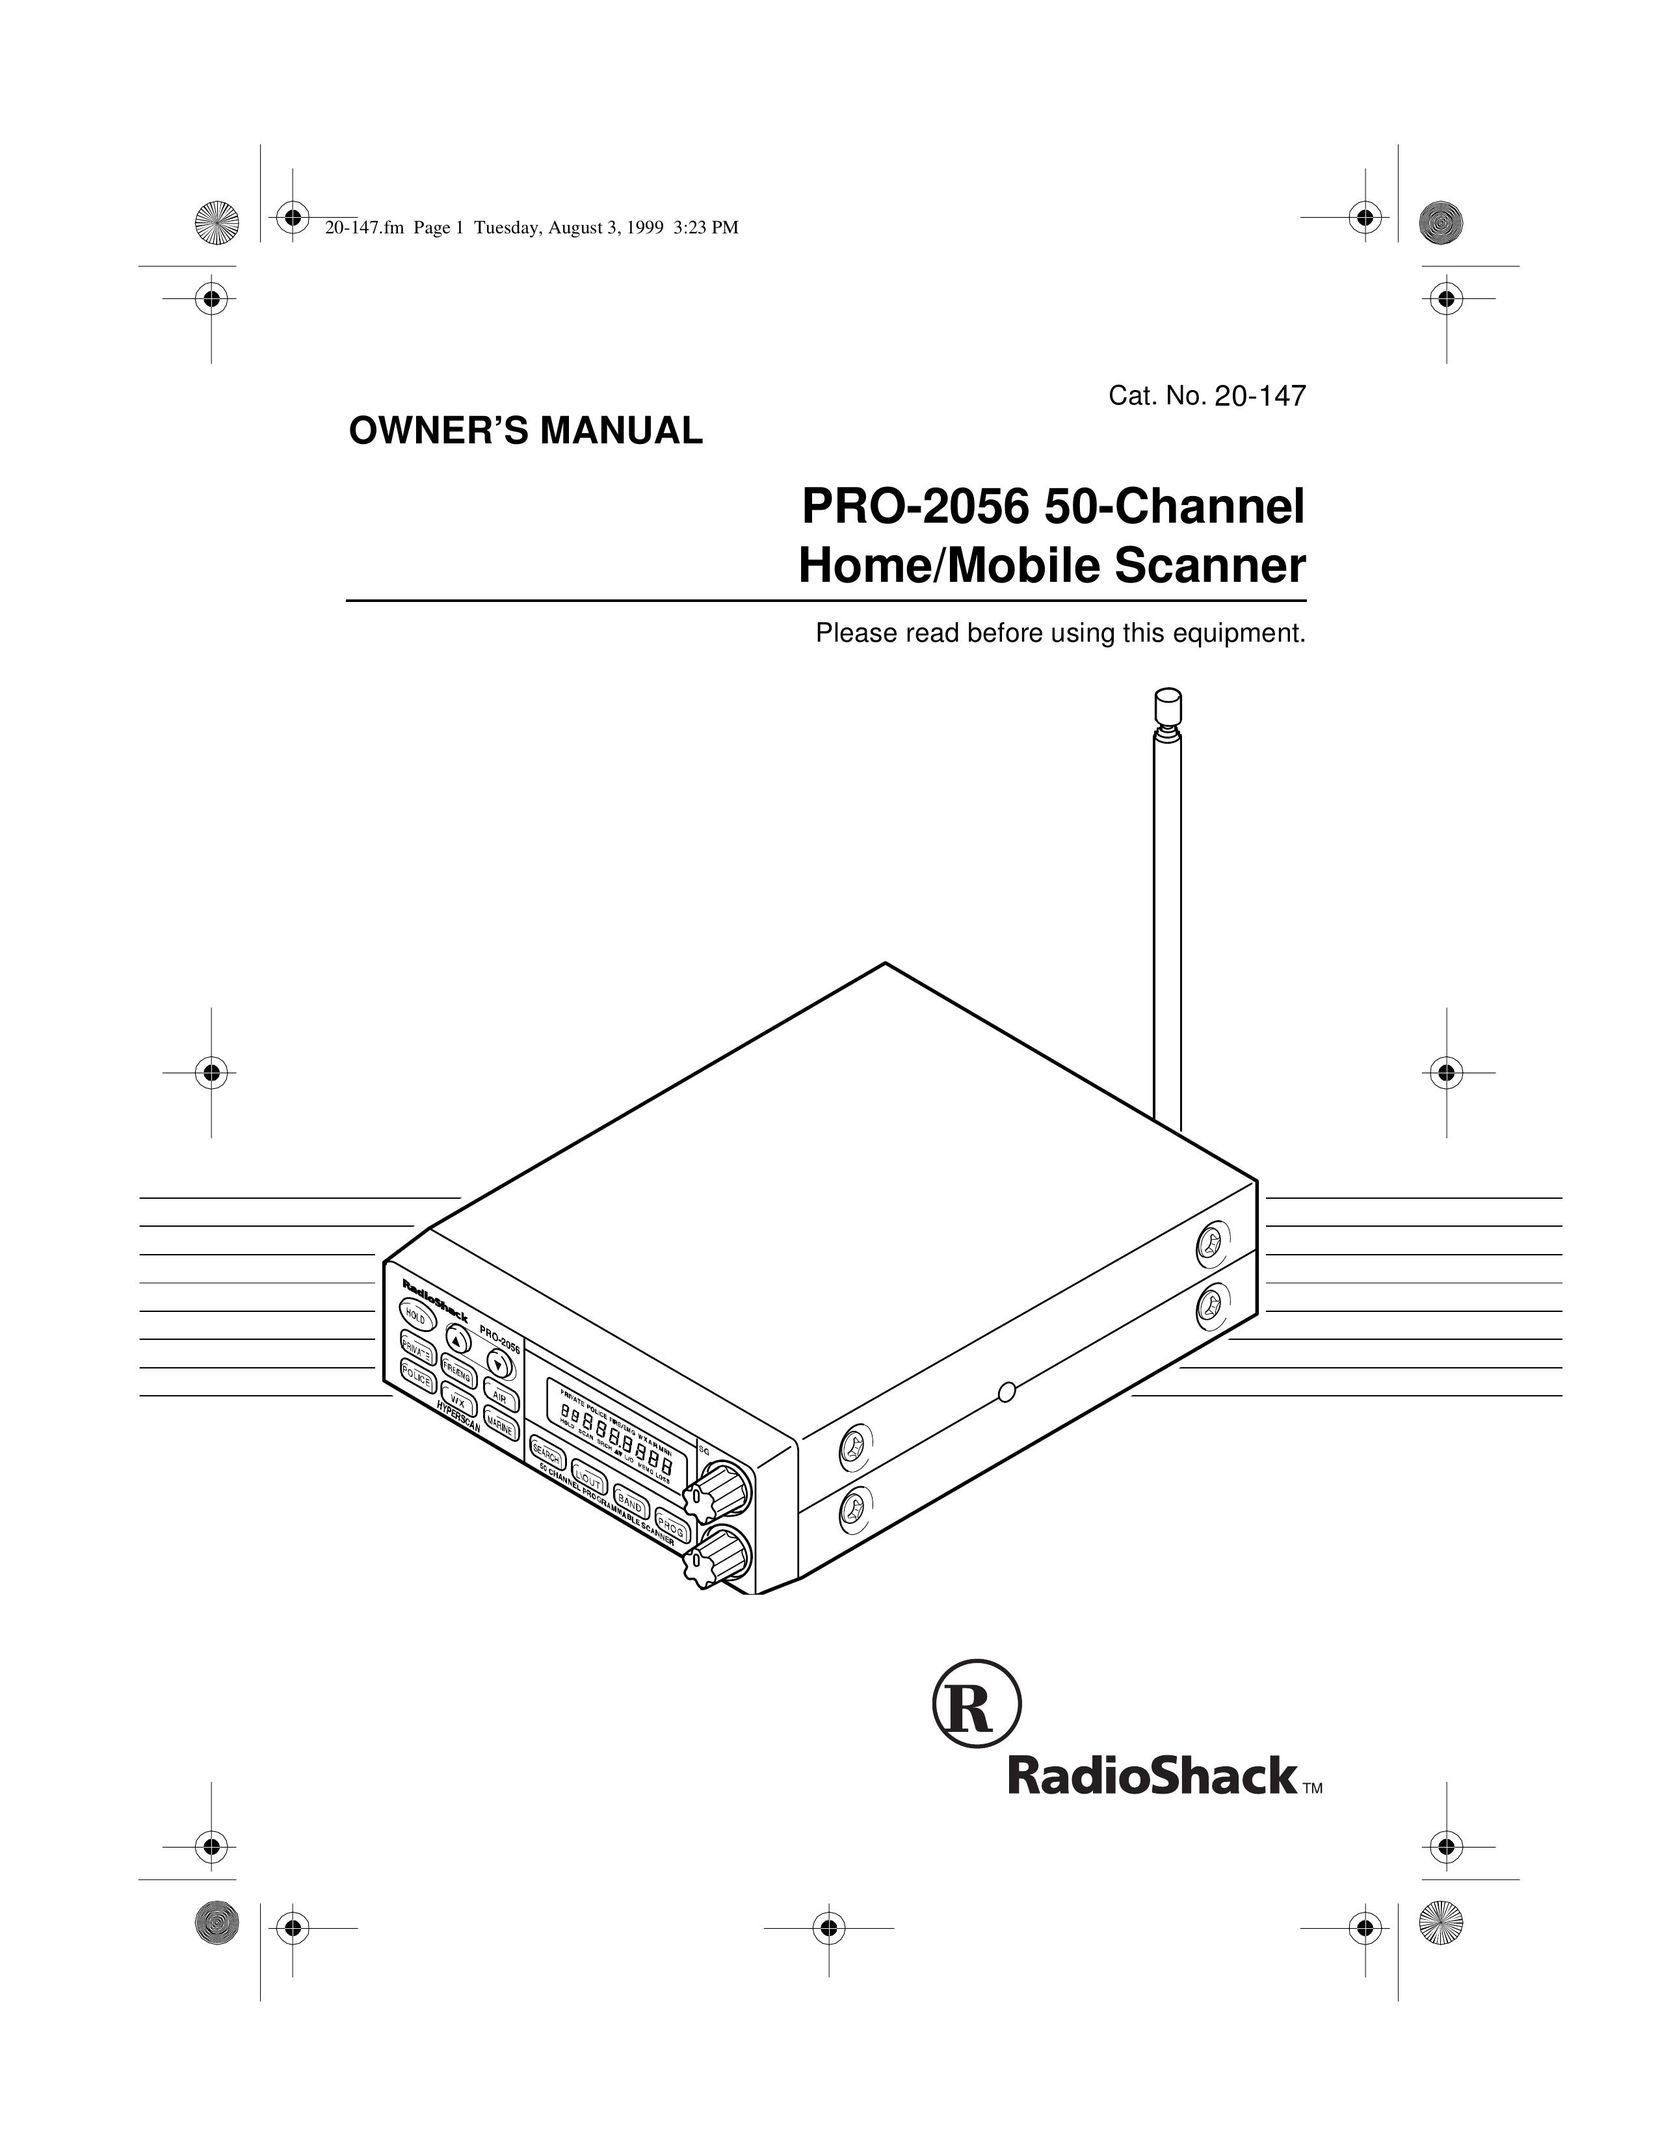 Radio Shack PRO-2056 Scanner User Manual